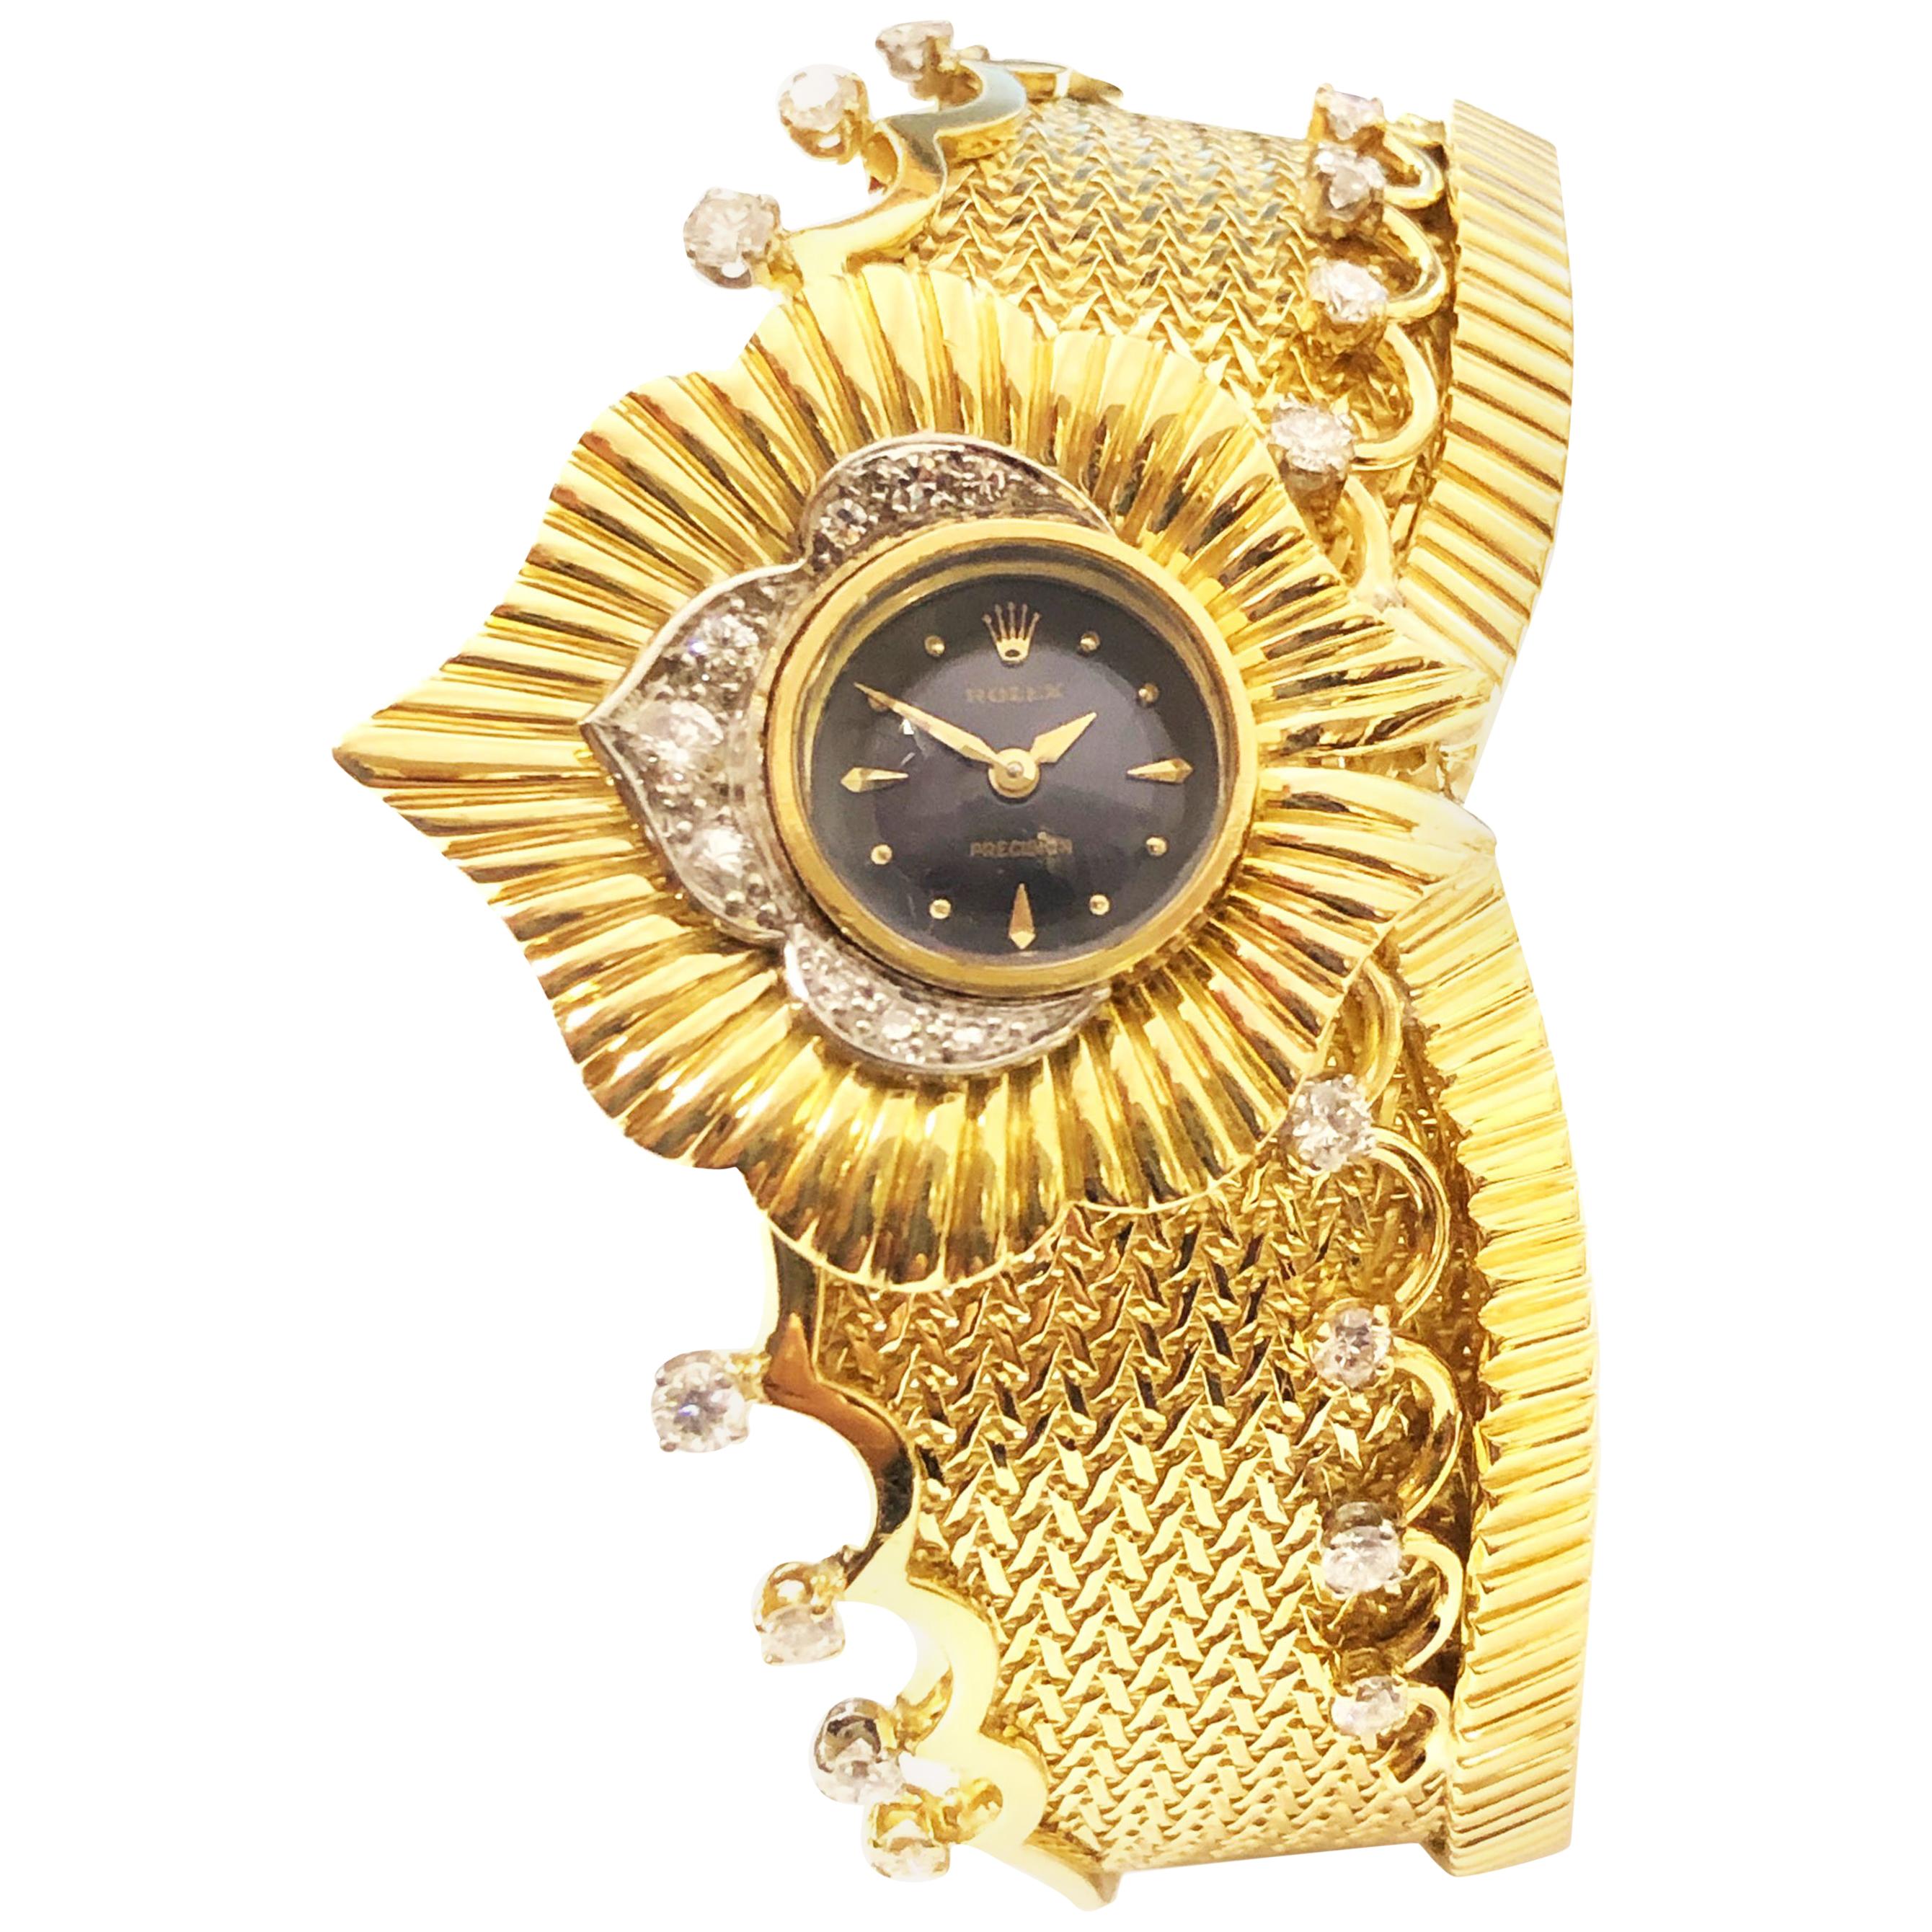 Rolex 1960s Large Yellow Gold and Diamond Bangle Bracelet Watch